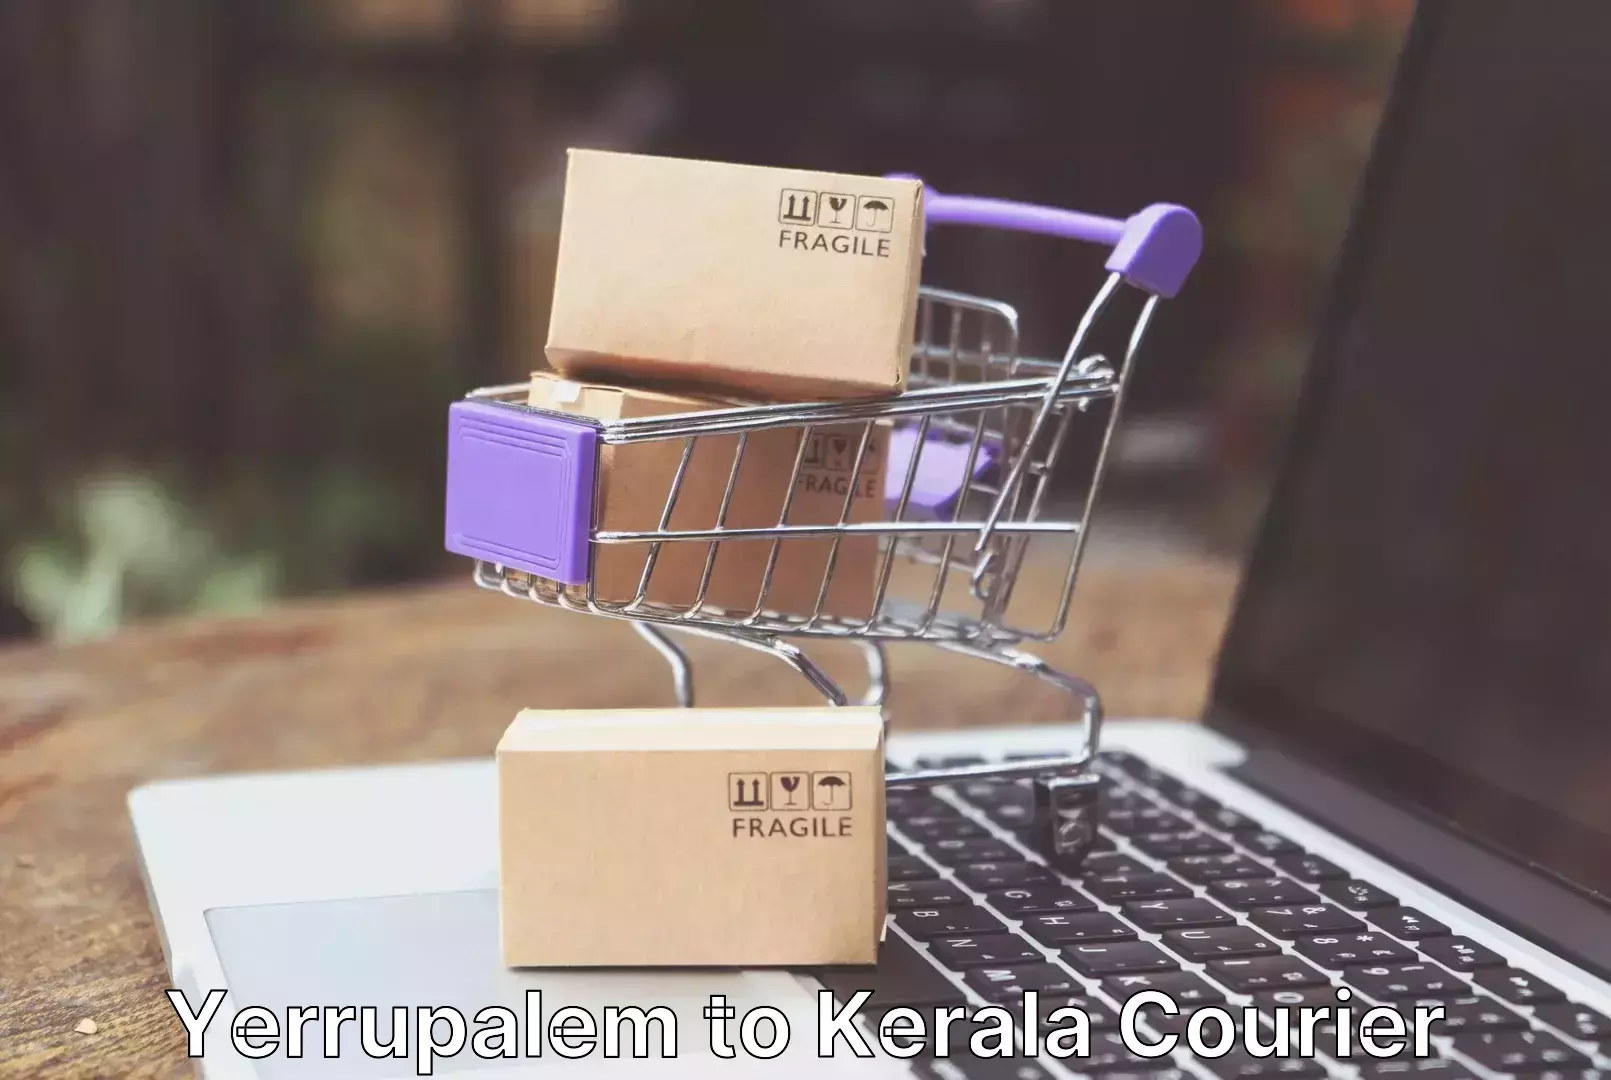 Professional moving company Yerrupalem to Kerala